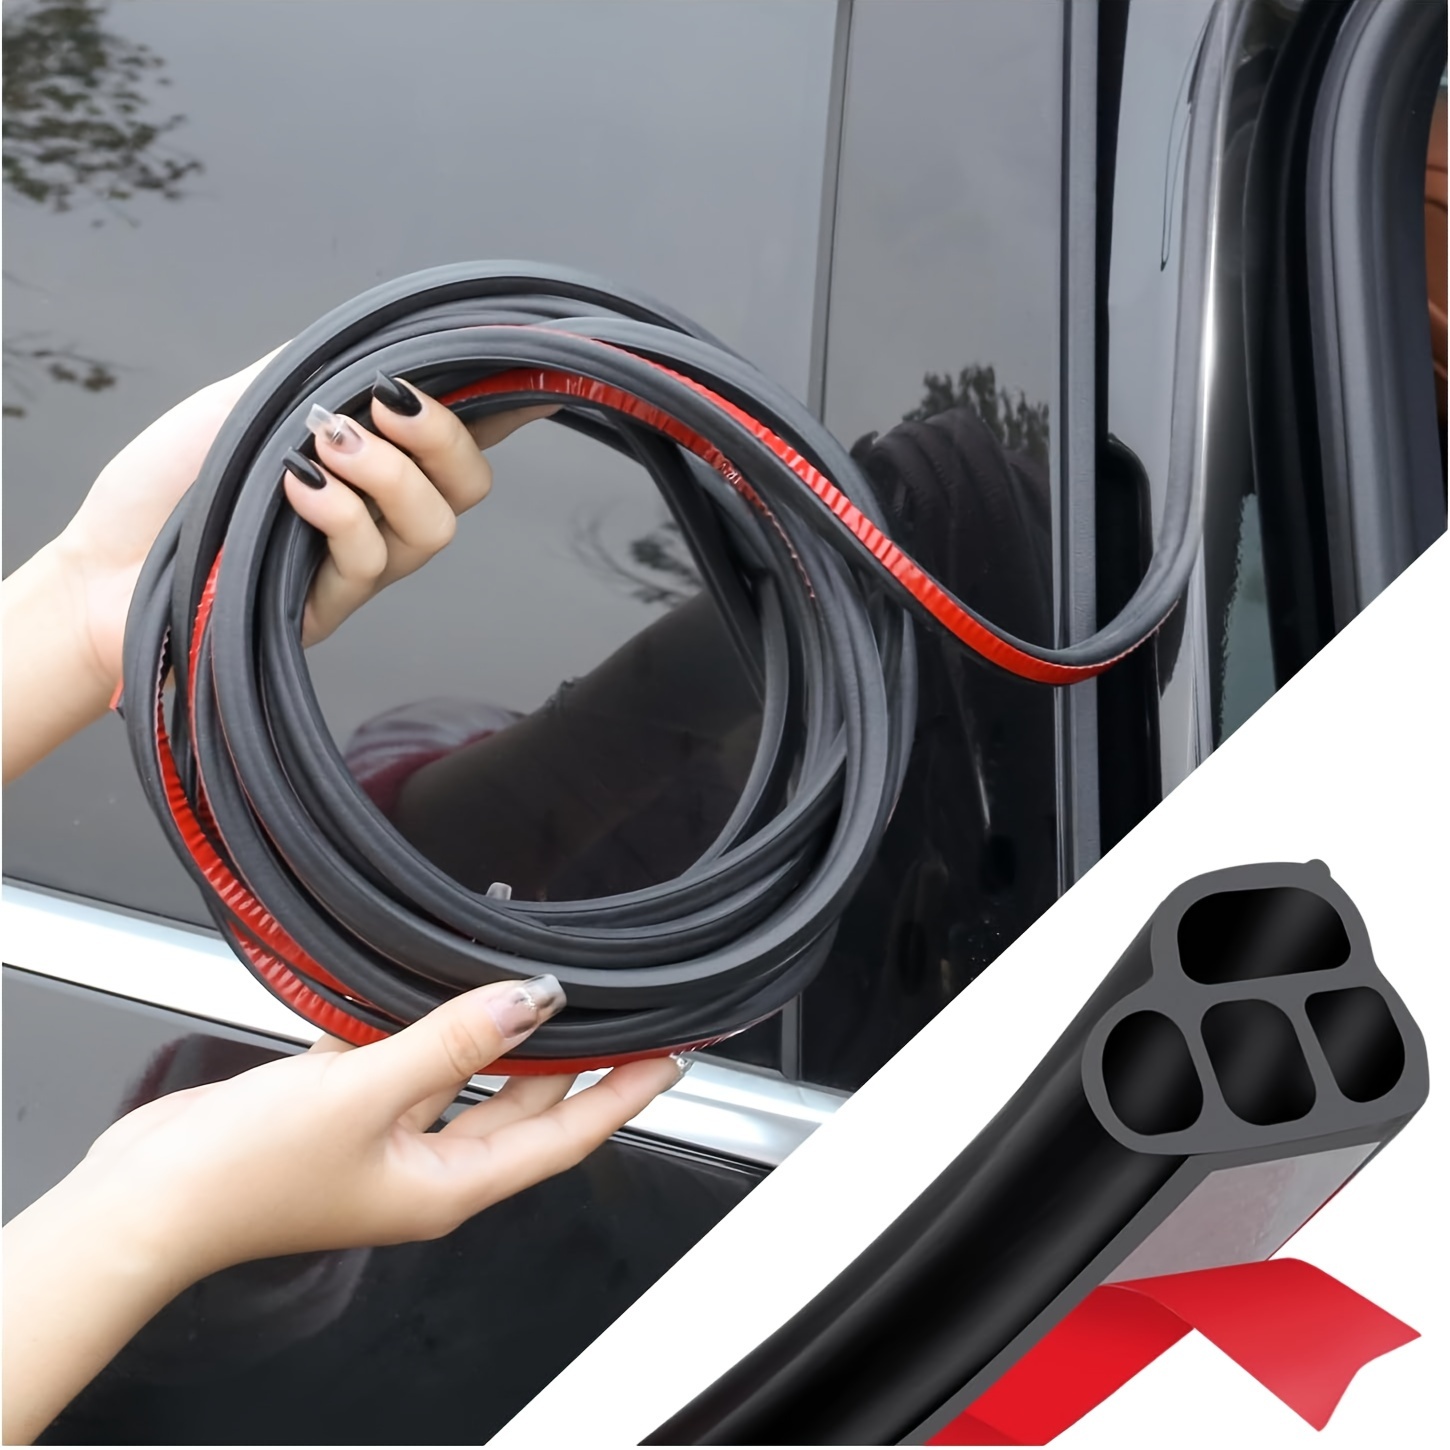 

Jabukosu Premium L-shape Car Door Seal Strip - Double Layer, Easy Install, Weatherproof & Soundproof Rubber For Enhanced Comfort In Cars, Suvs,